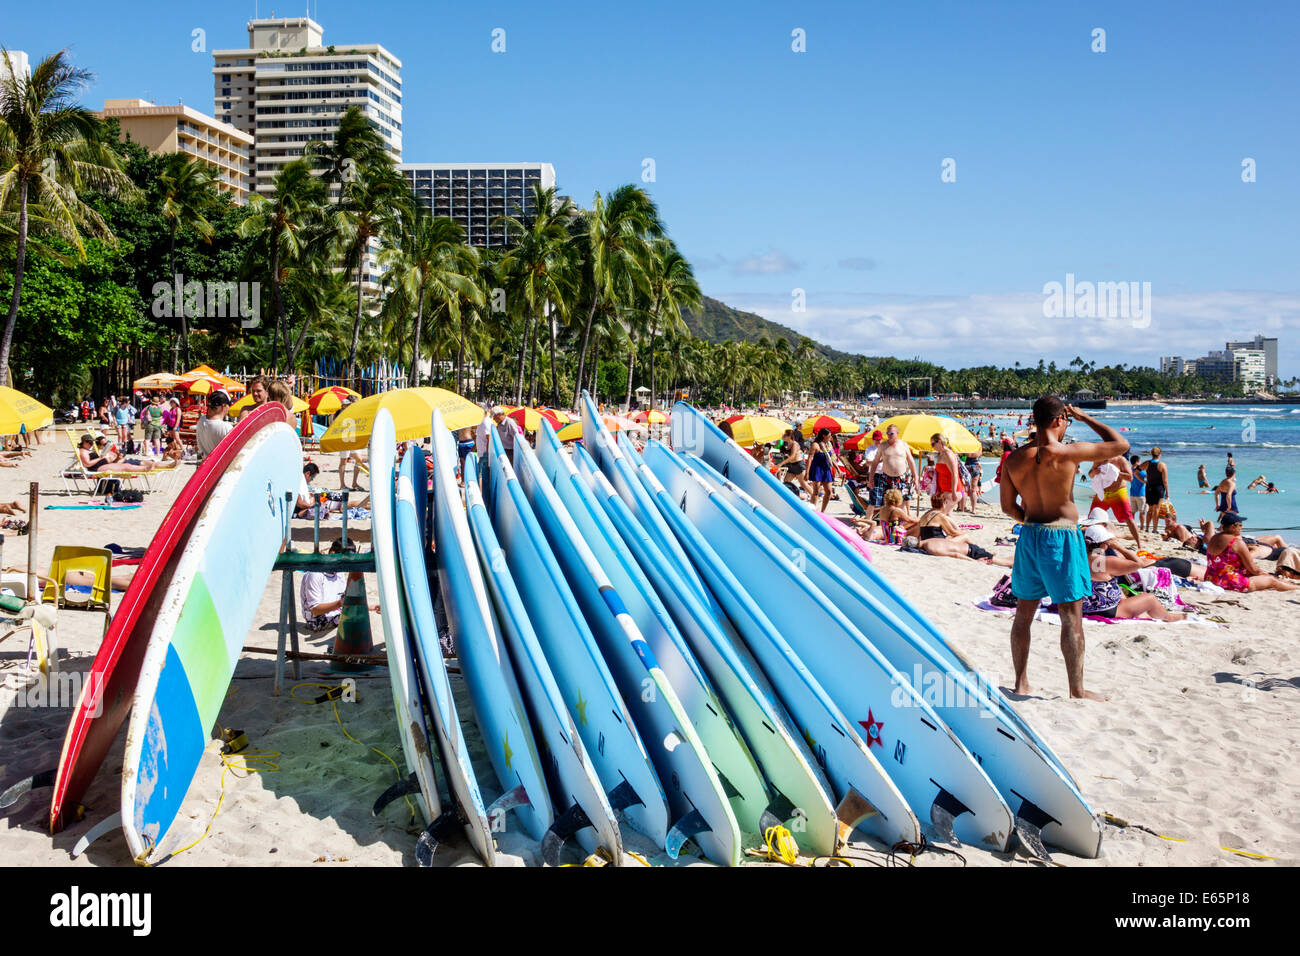 Honolulu Hawaii,Oahu,Hawaiian,Waikiki Beach,resort,Kuhio Beach state Park,Oceano Pacifico,solarium,famiglie,affollate,ombrelloni,tavole da surf,affitto,U Foto Stock